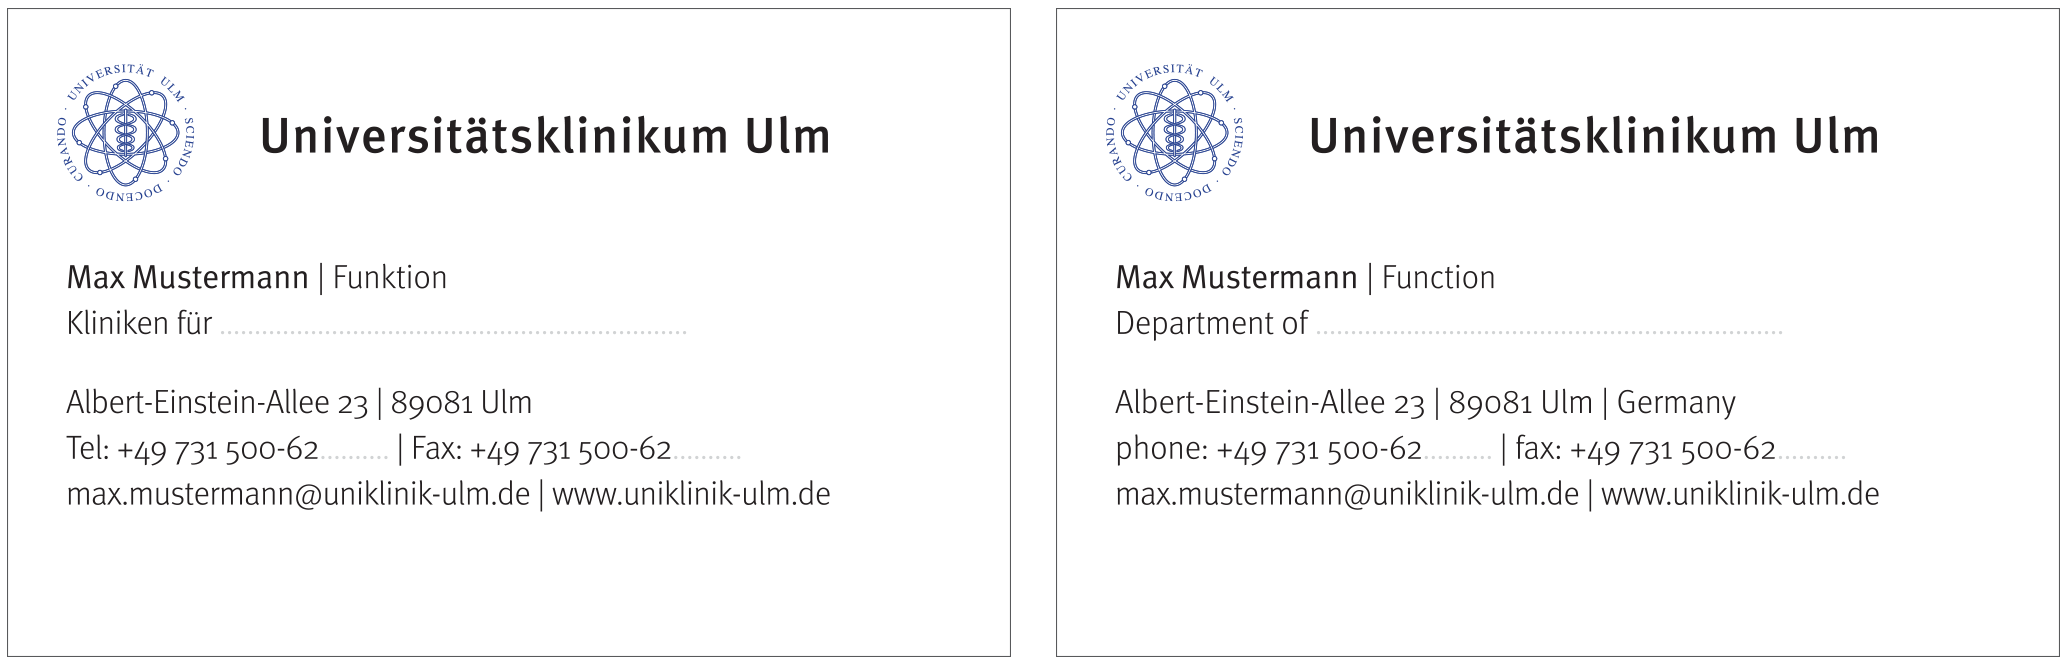 Bilinguale Mustervisitenkarte des Universitätsklinikums Ulm